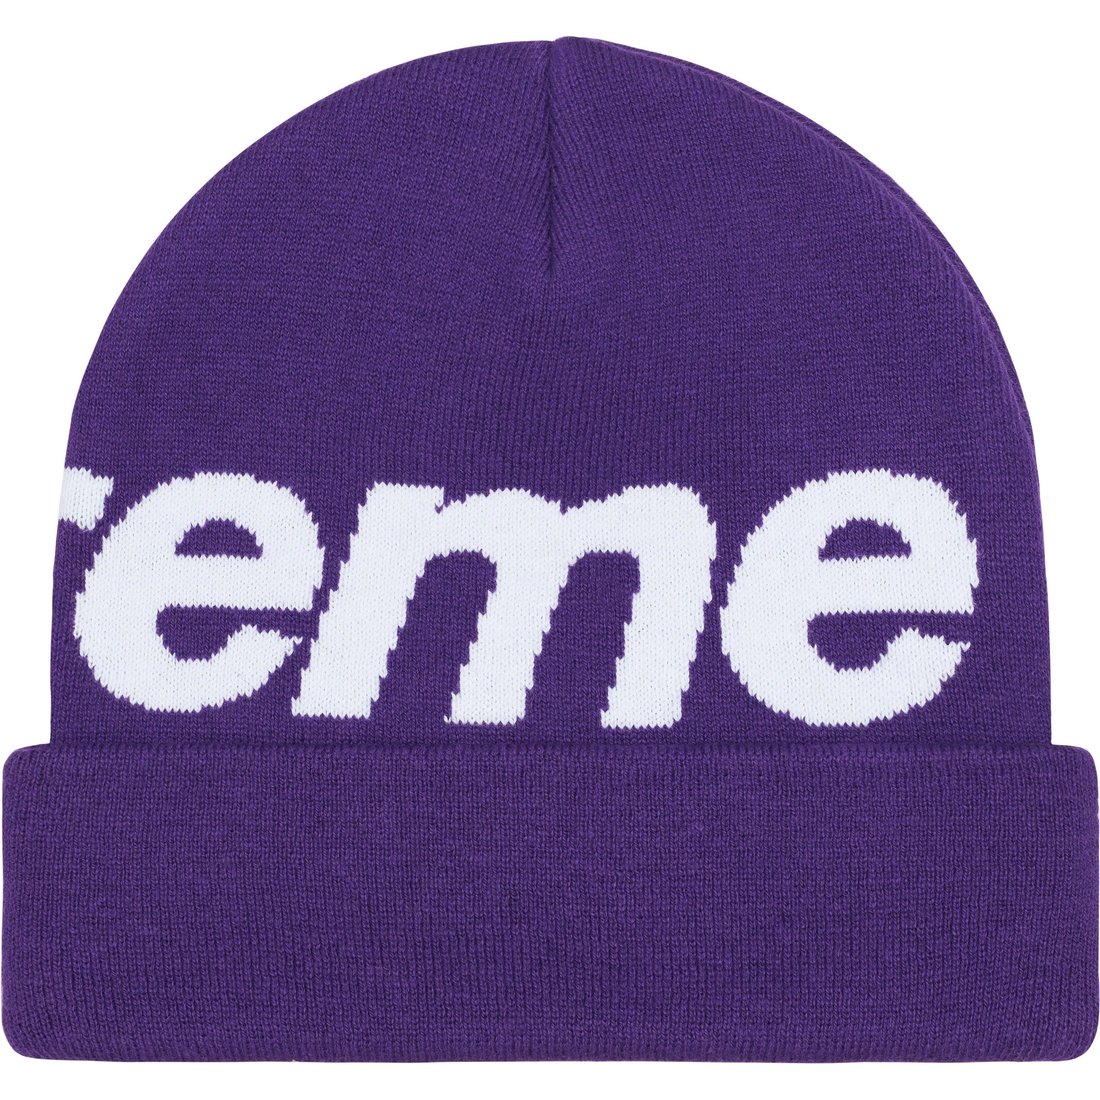 Details on Big Logo Beanie Dark Purple from fall winter
                                                    2023 (Price is $44)